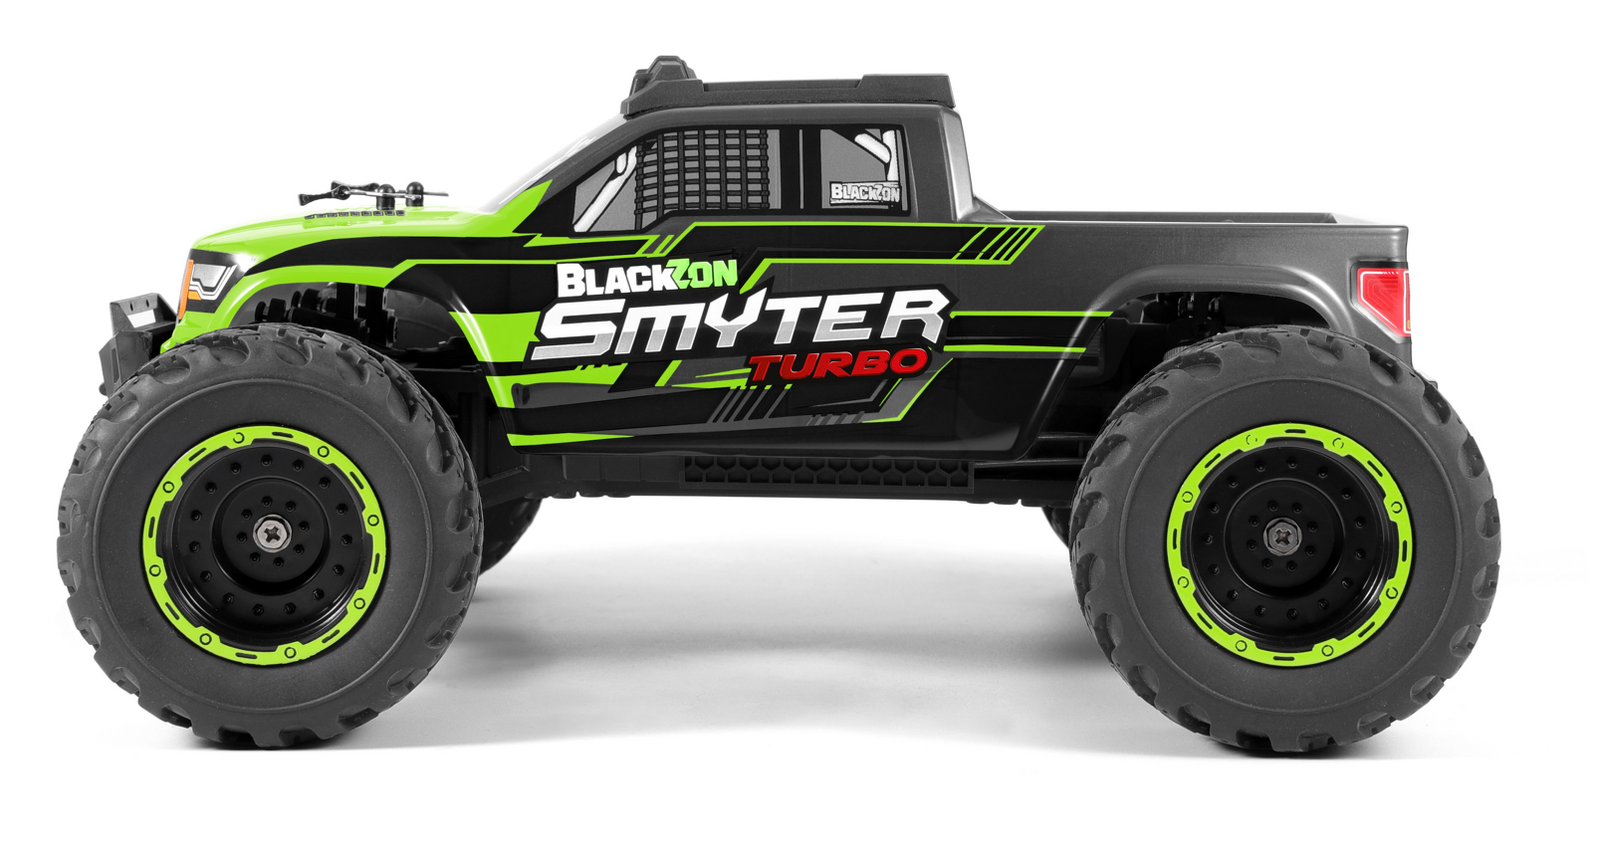 BlackZon 1/12 Smyter MT Turbo 4WD 3S Brushless - Green - [Sunshine-Coast] - Blackzon - [RC-Car] - [Scale-Model]